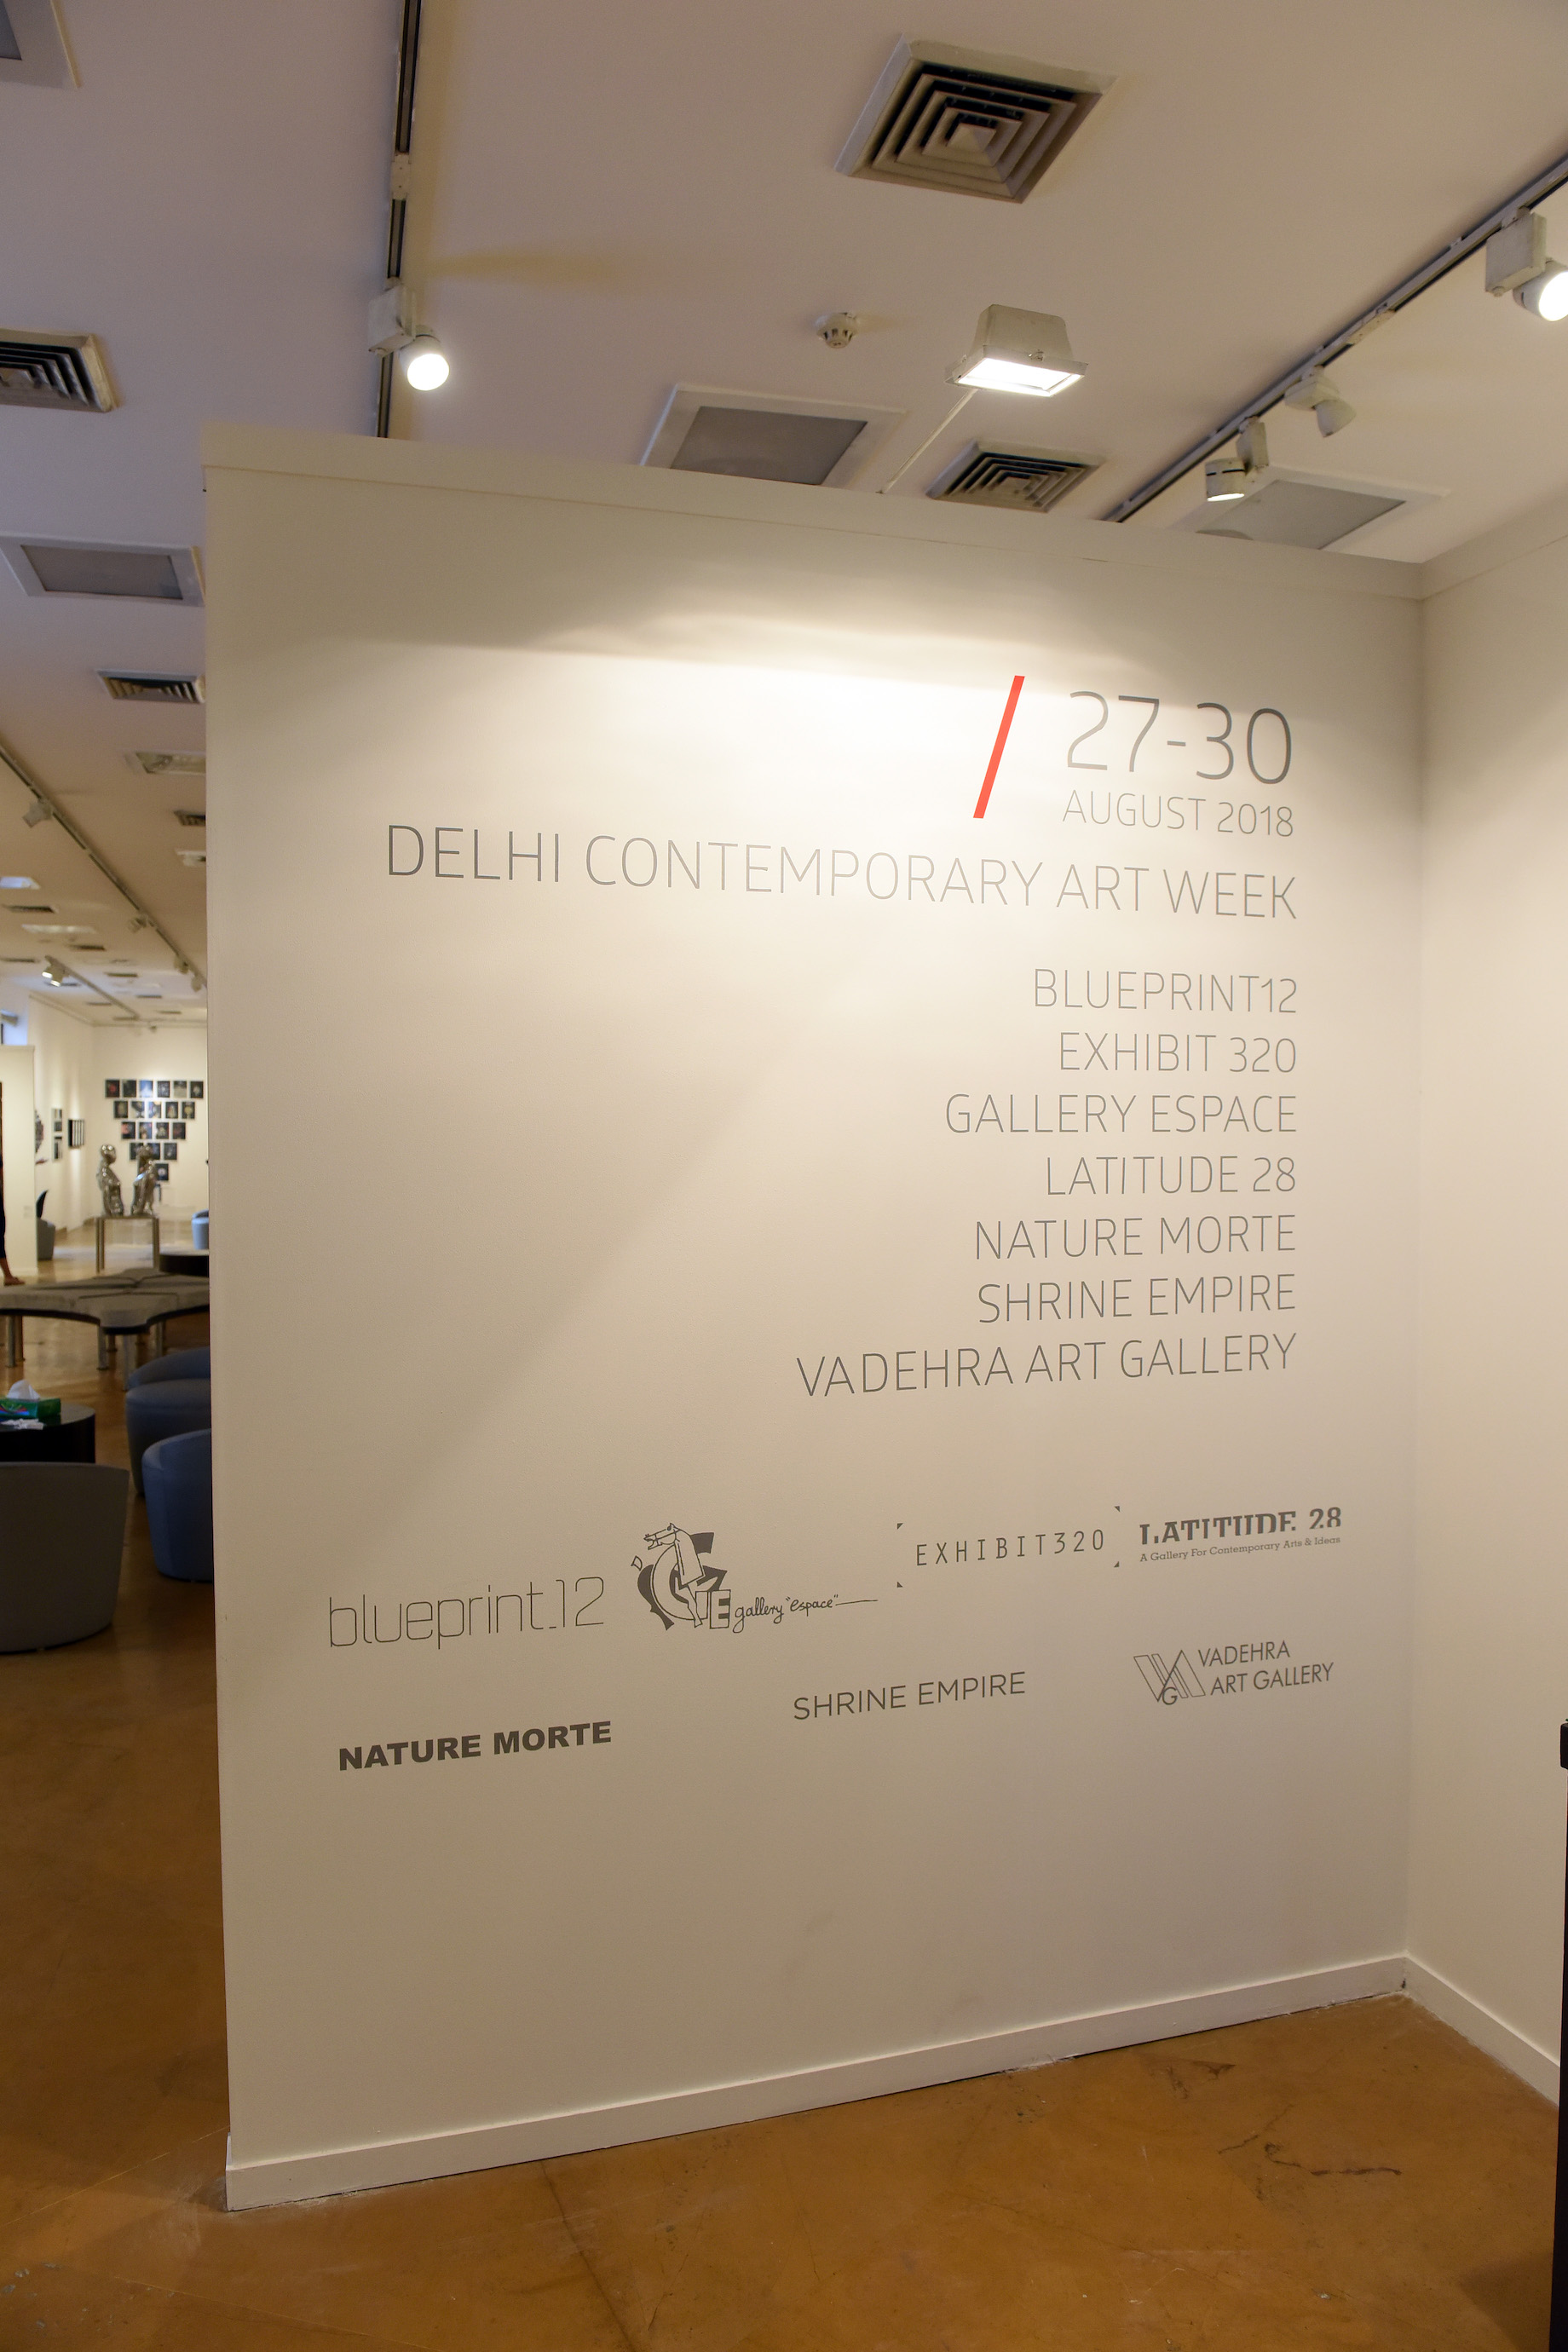 Delhi Contemporary Art Week, south Asian artist